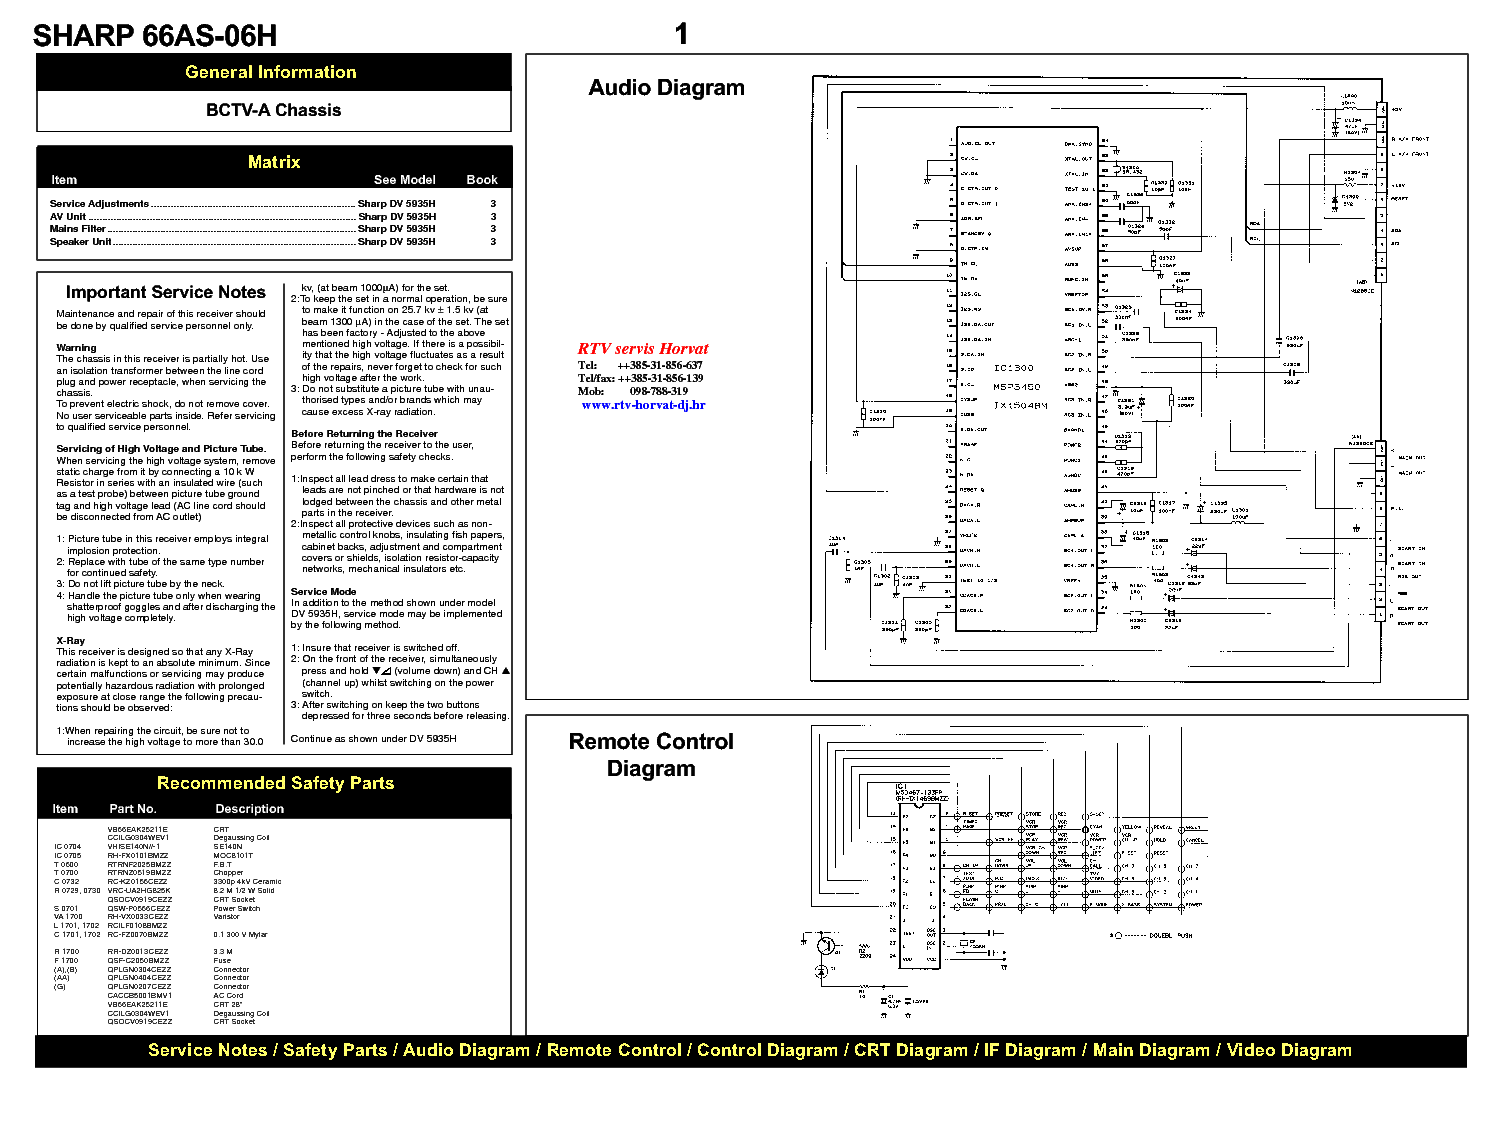 SHARP 66AS-06H CH BCTV-A SCH service manual (1st page)